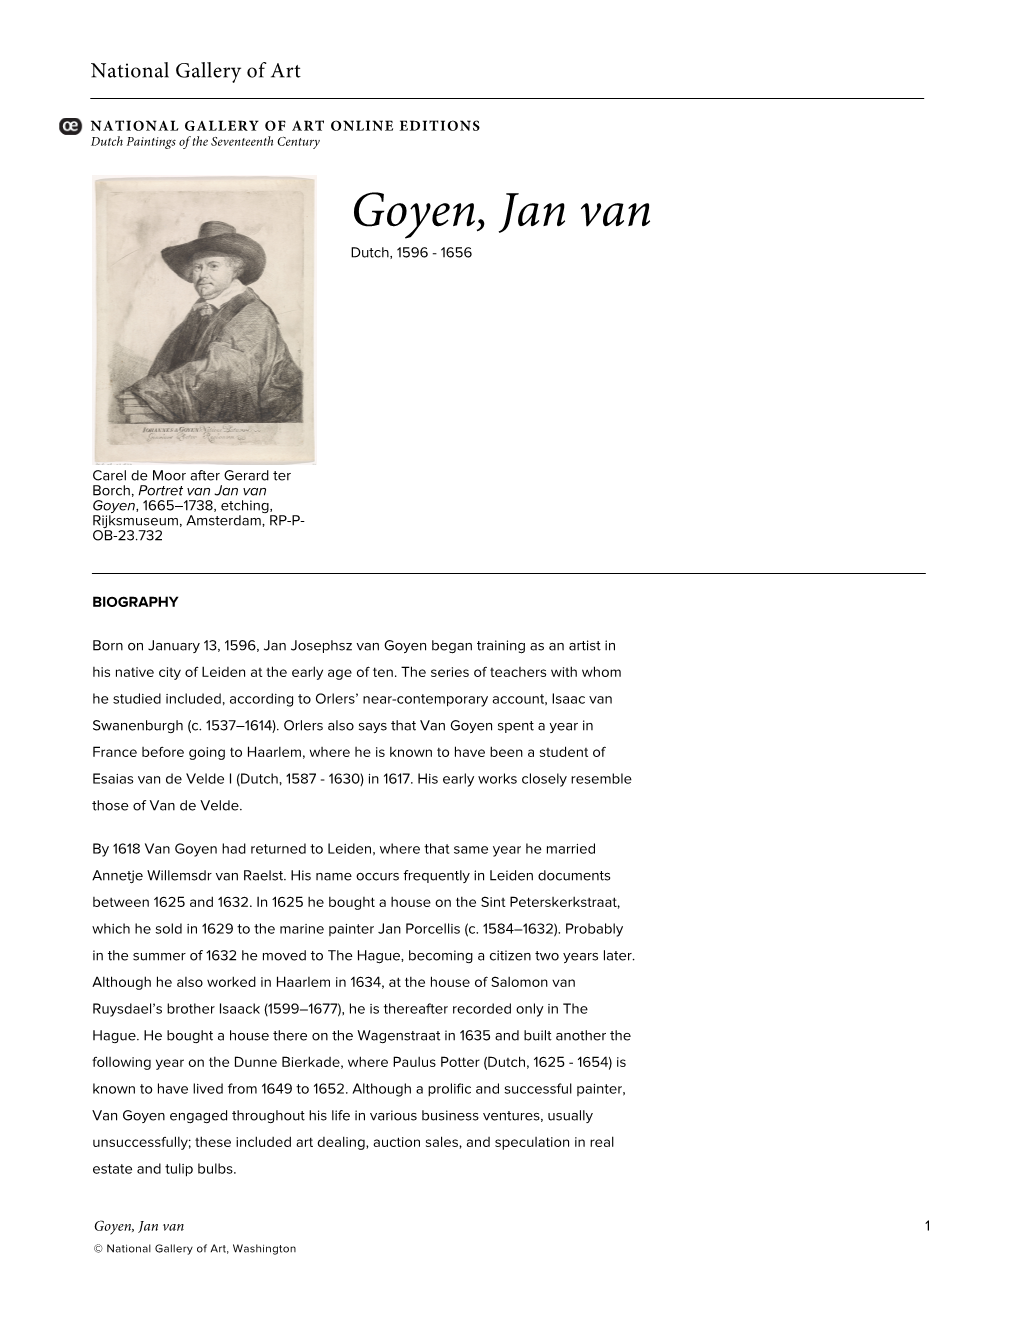 Goyen, Jan Van Dutch, 1596 - 1656